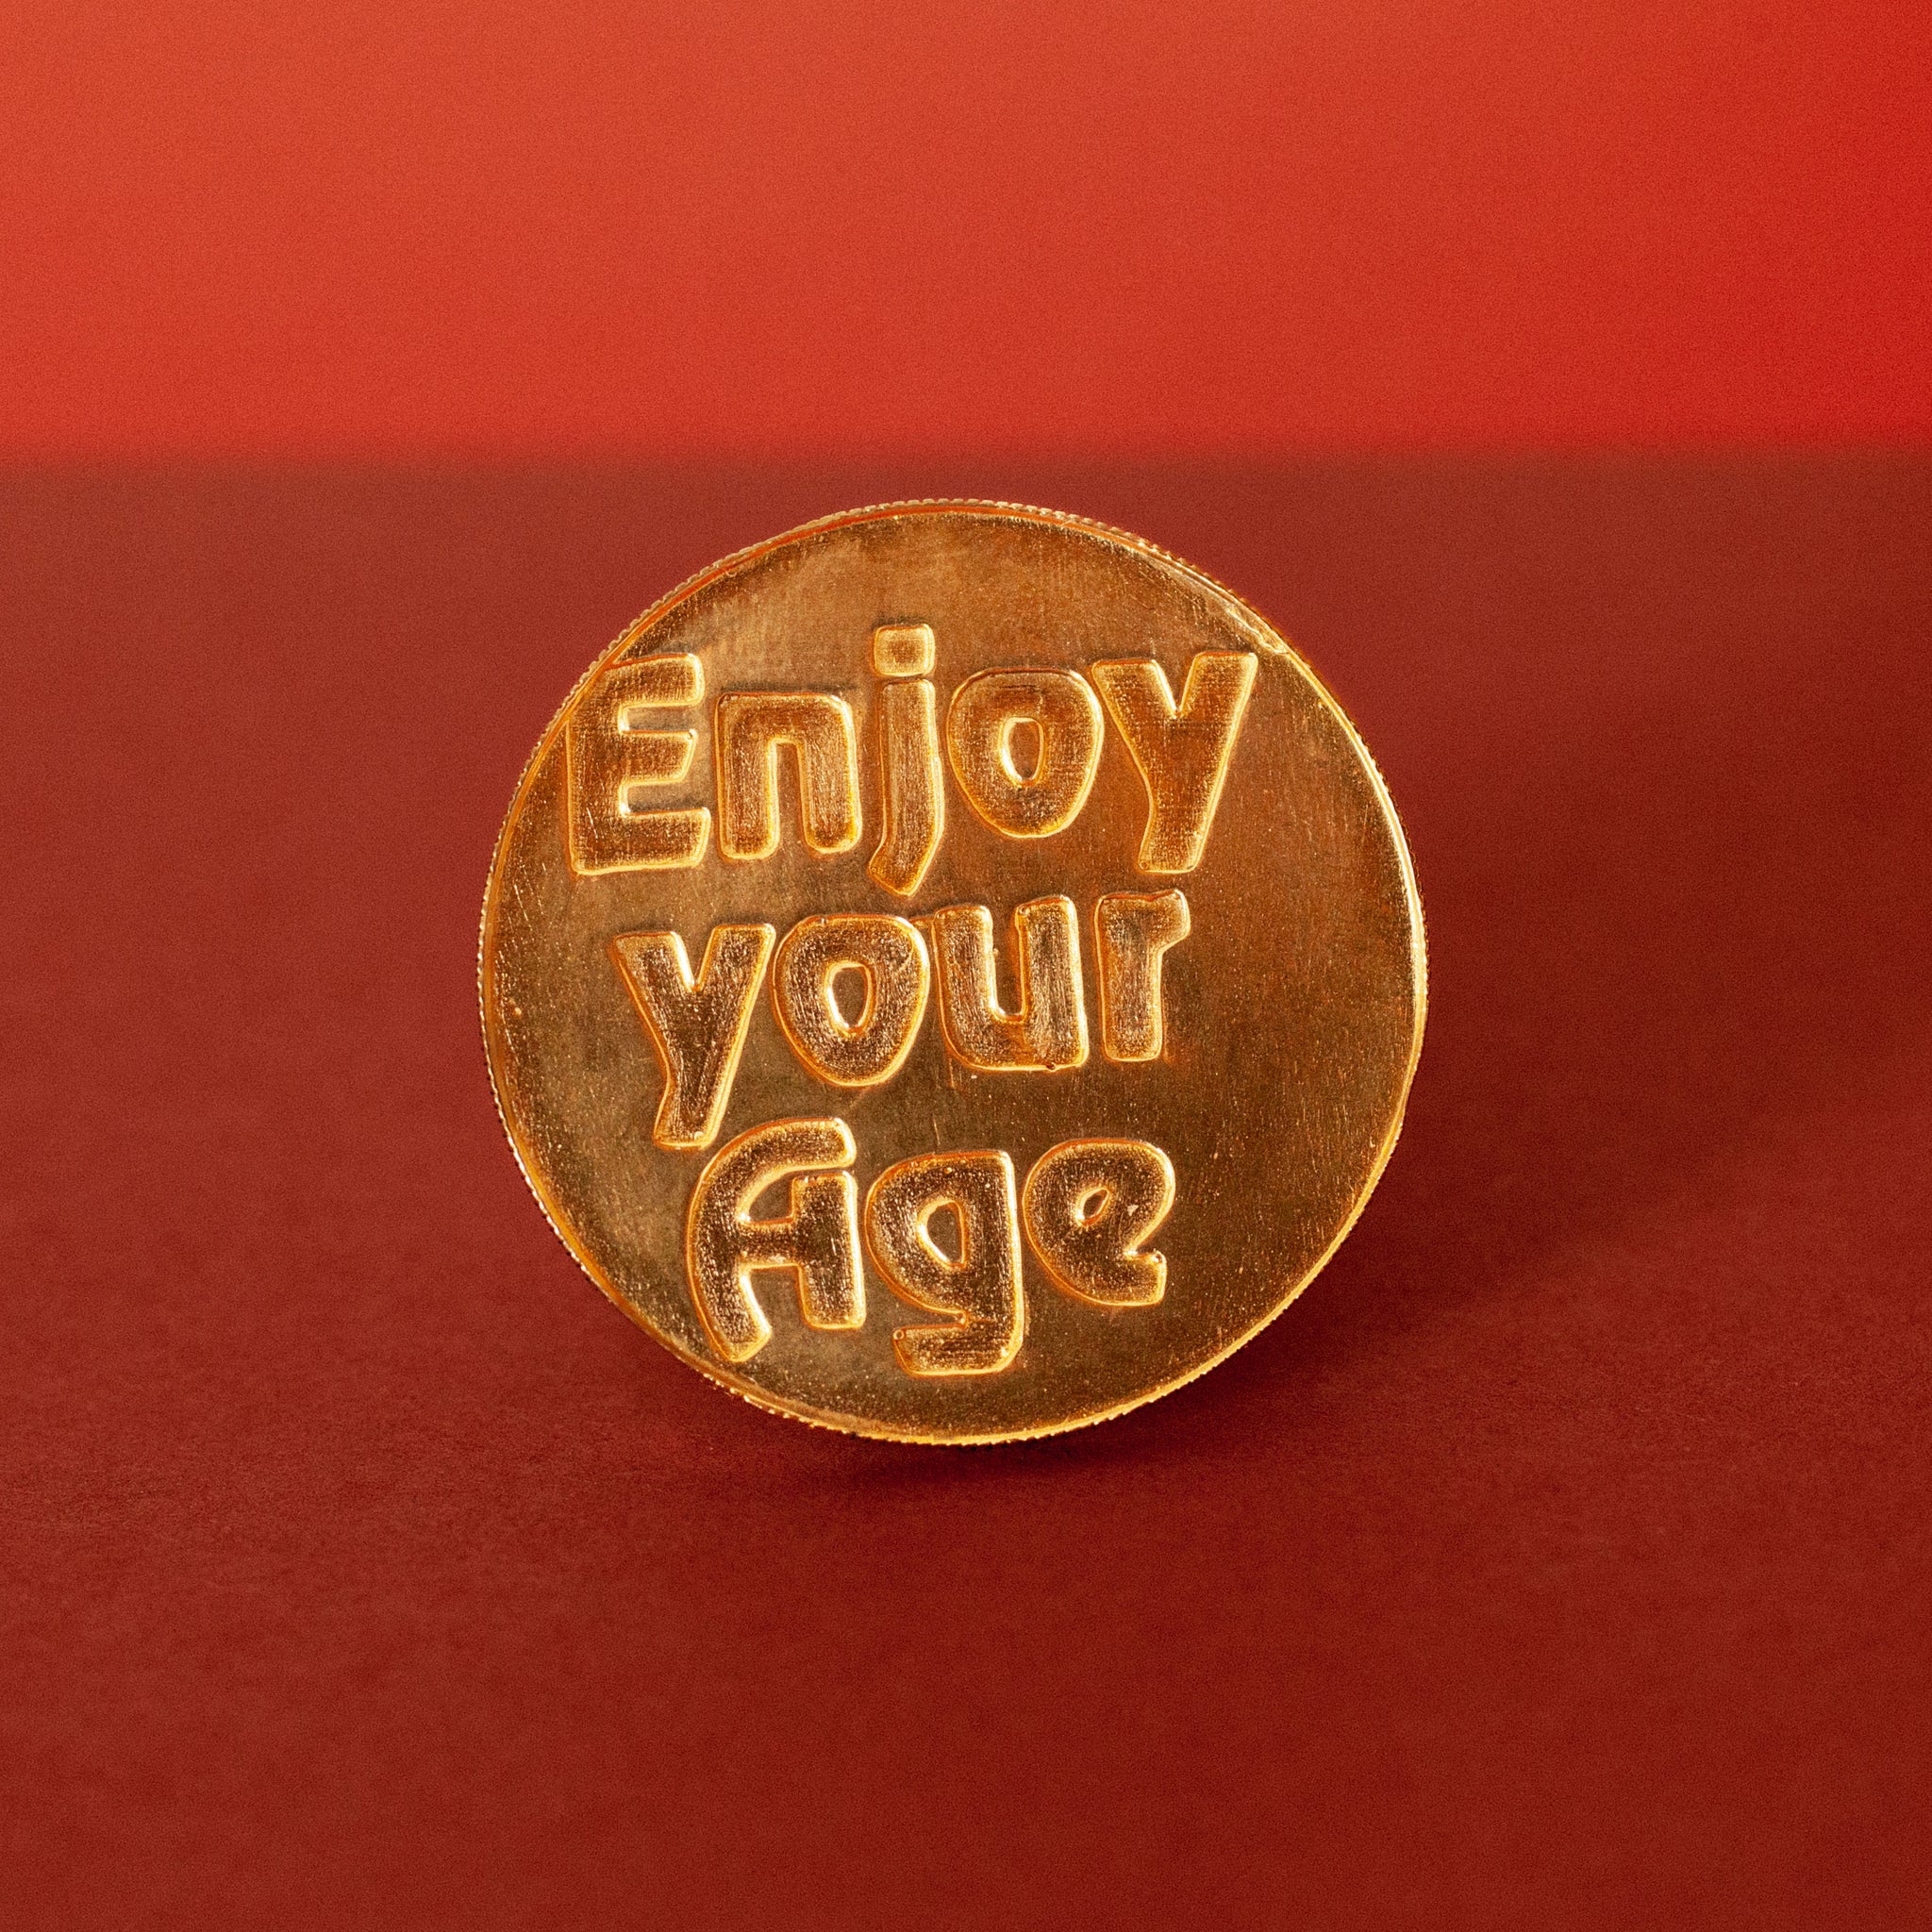 Enjoy Your Age Badge